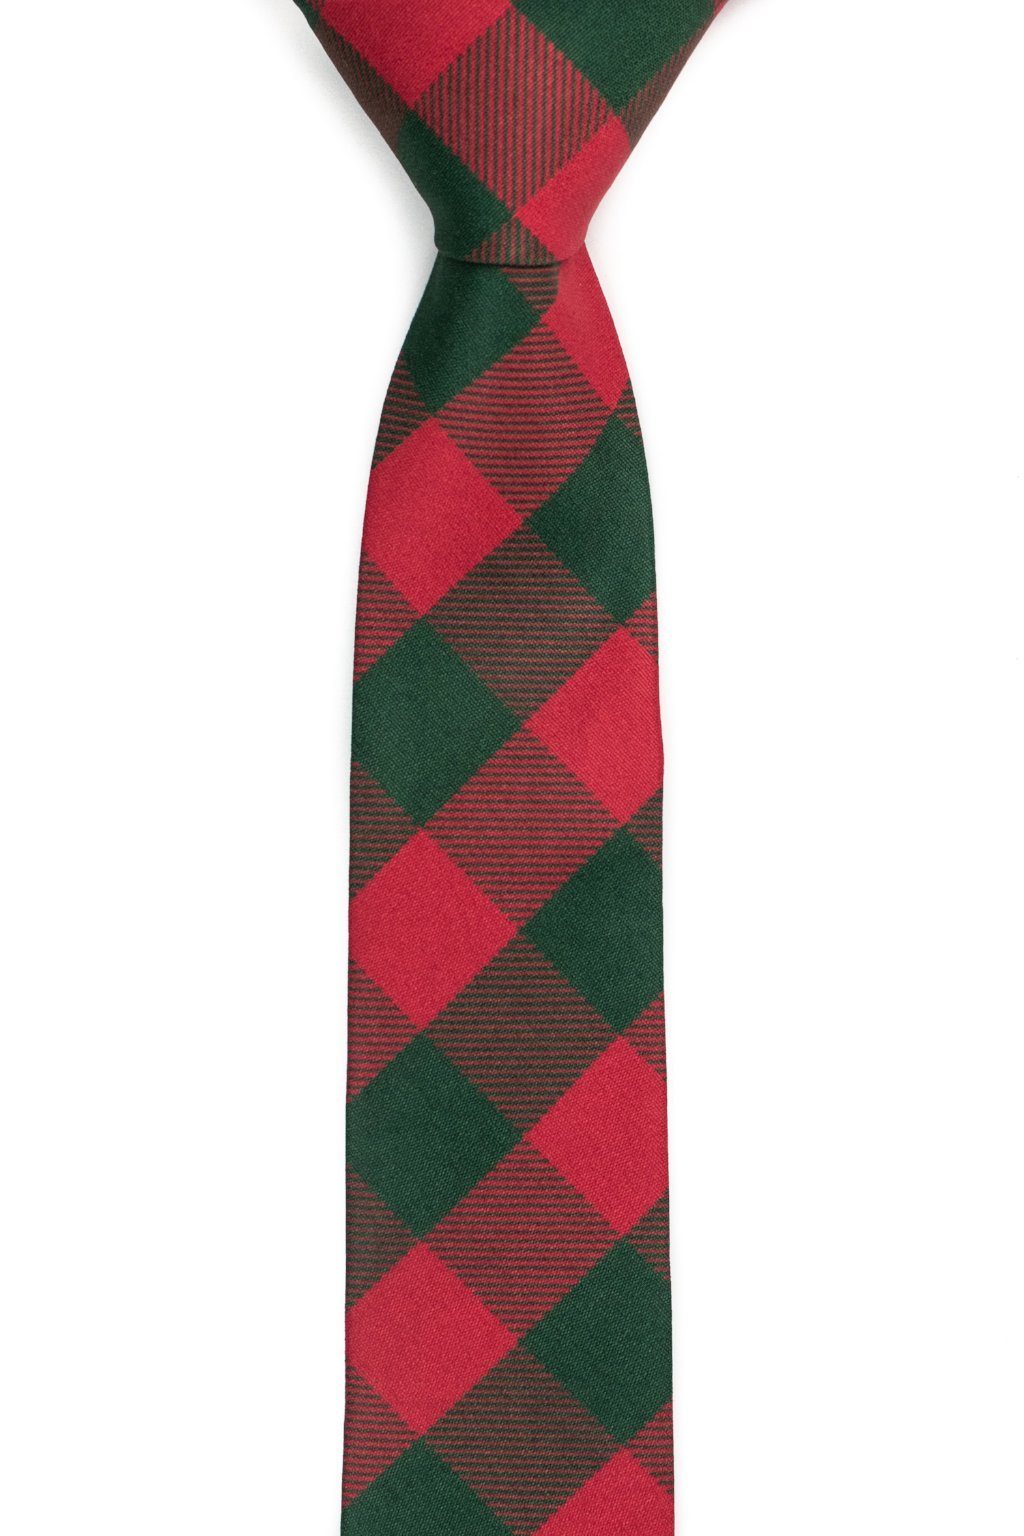 Piper Sparklecake - Green &amp; Red Checkered Tie